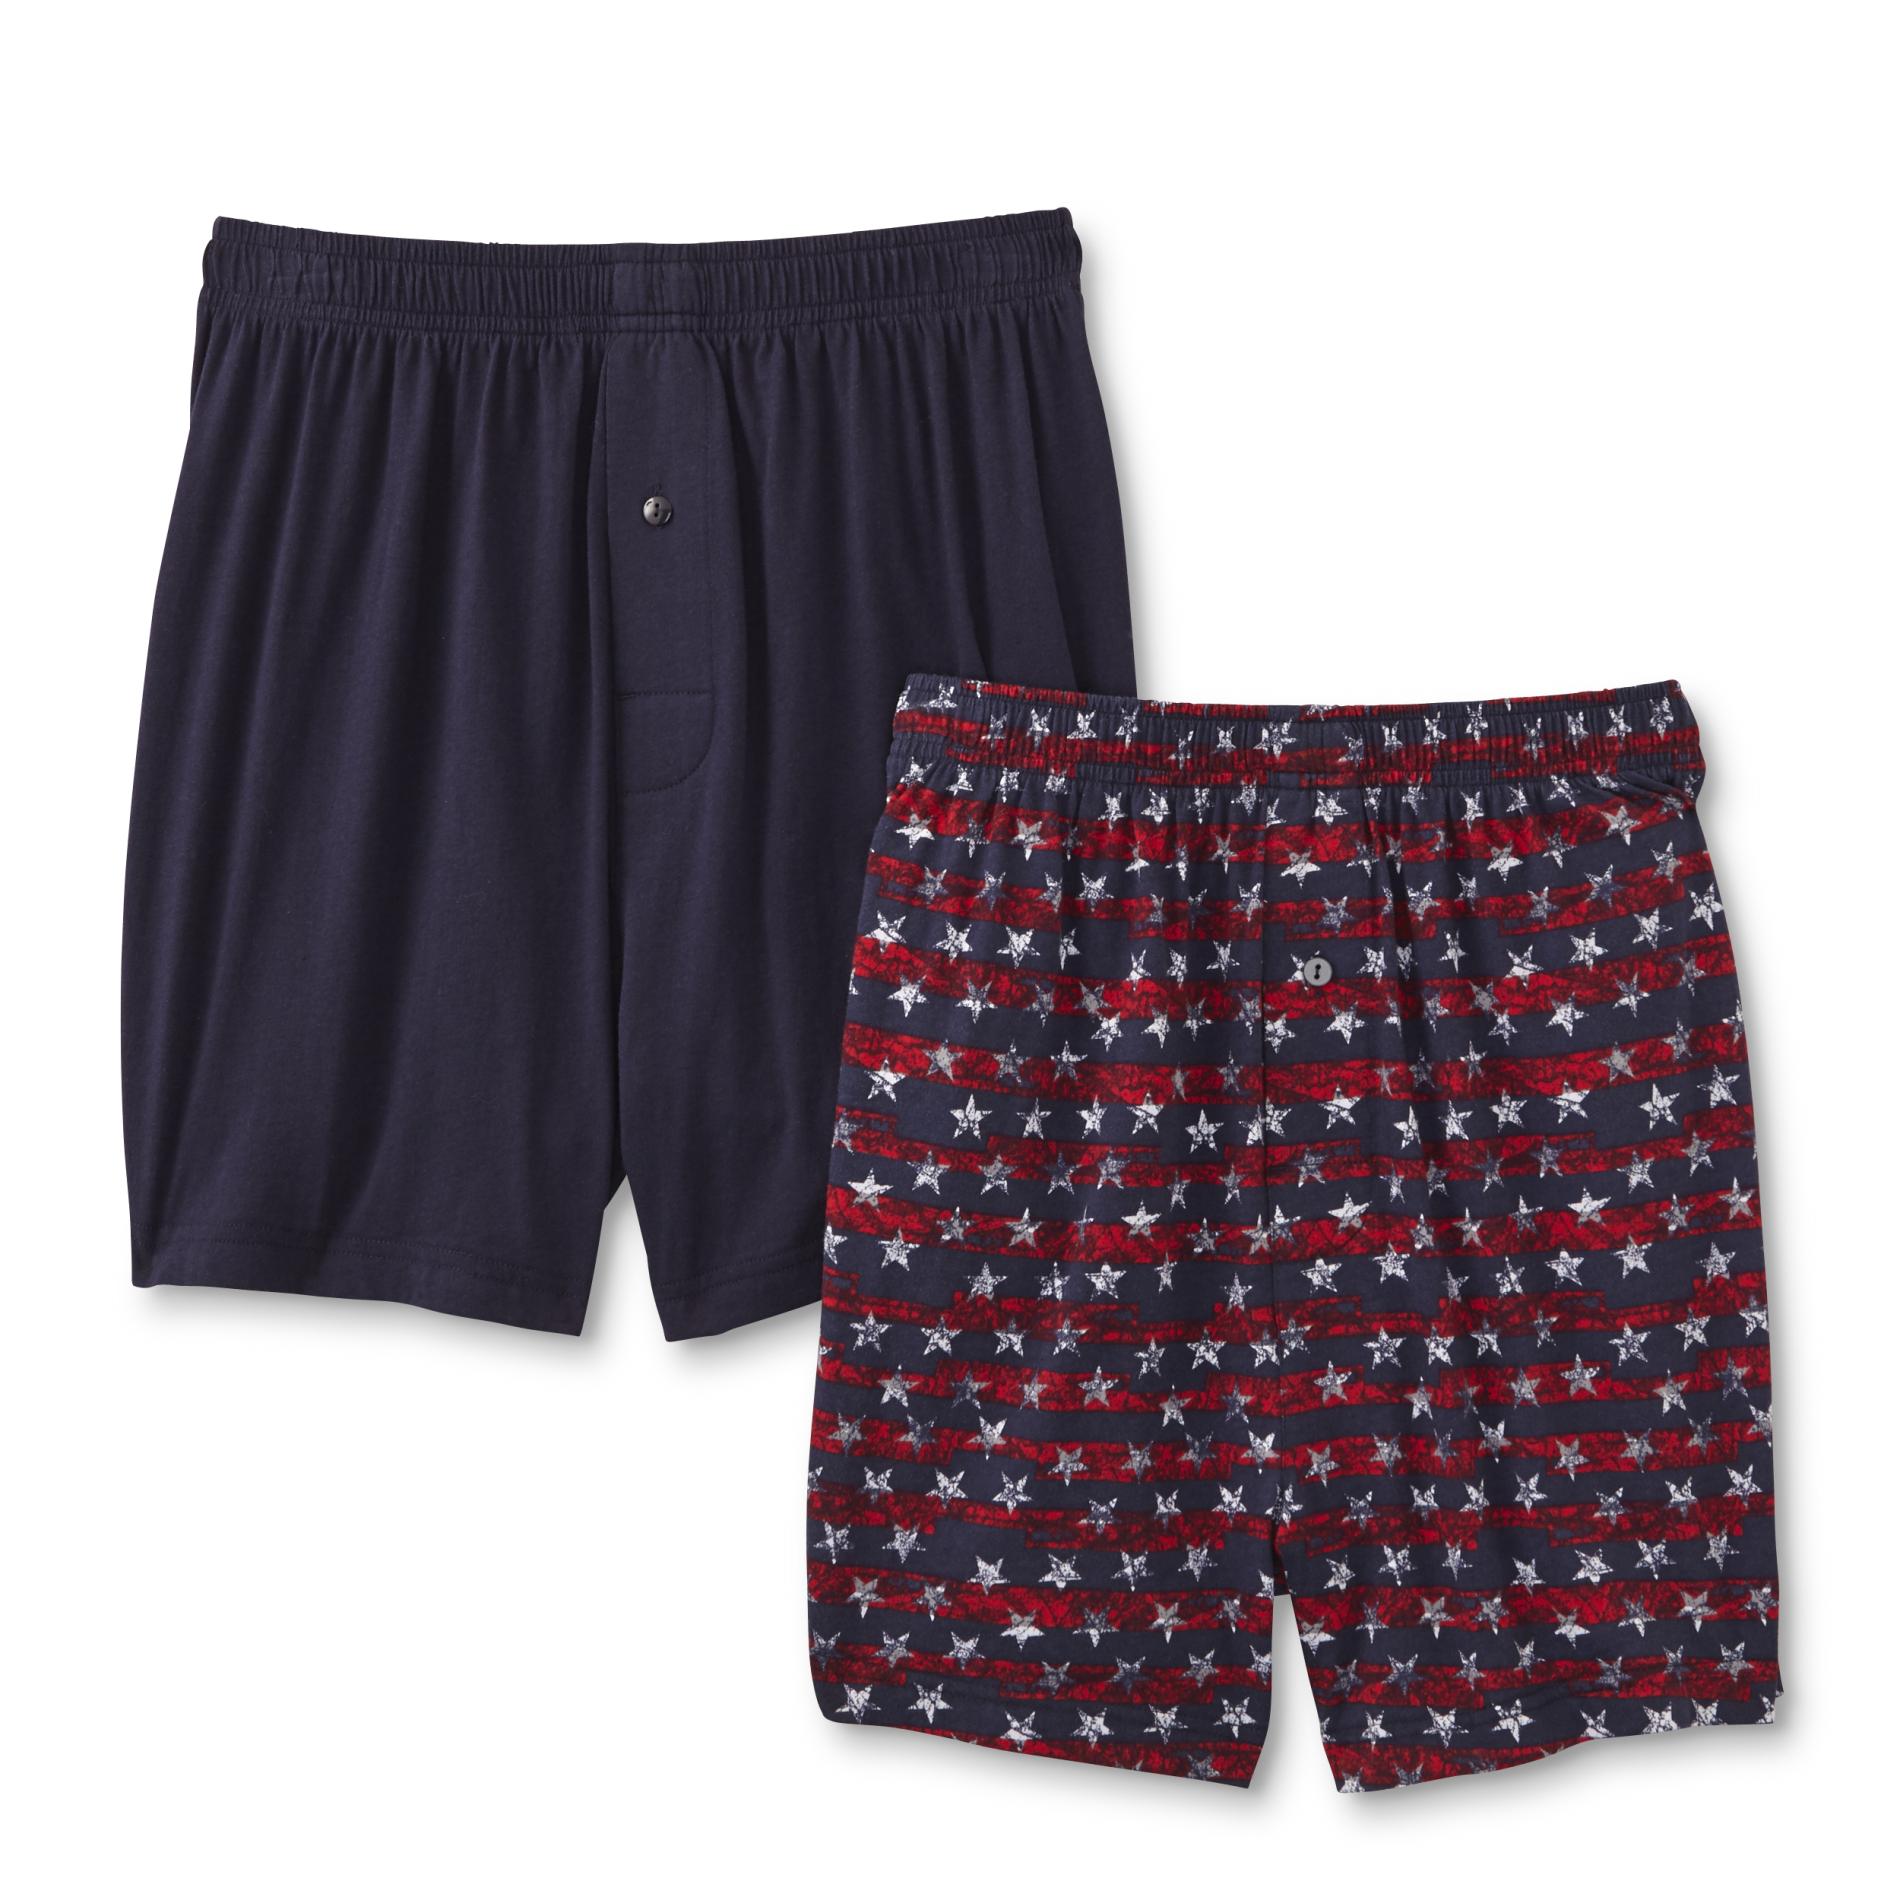 Joe Boxer Men's 2-Pairs Knit Boxer Shorts - Patriotic & Solid